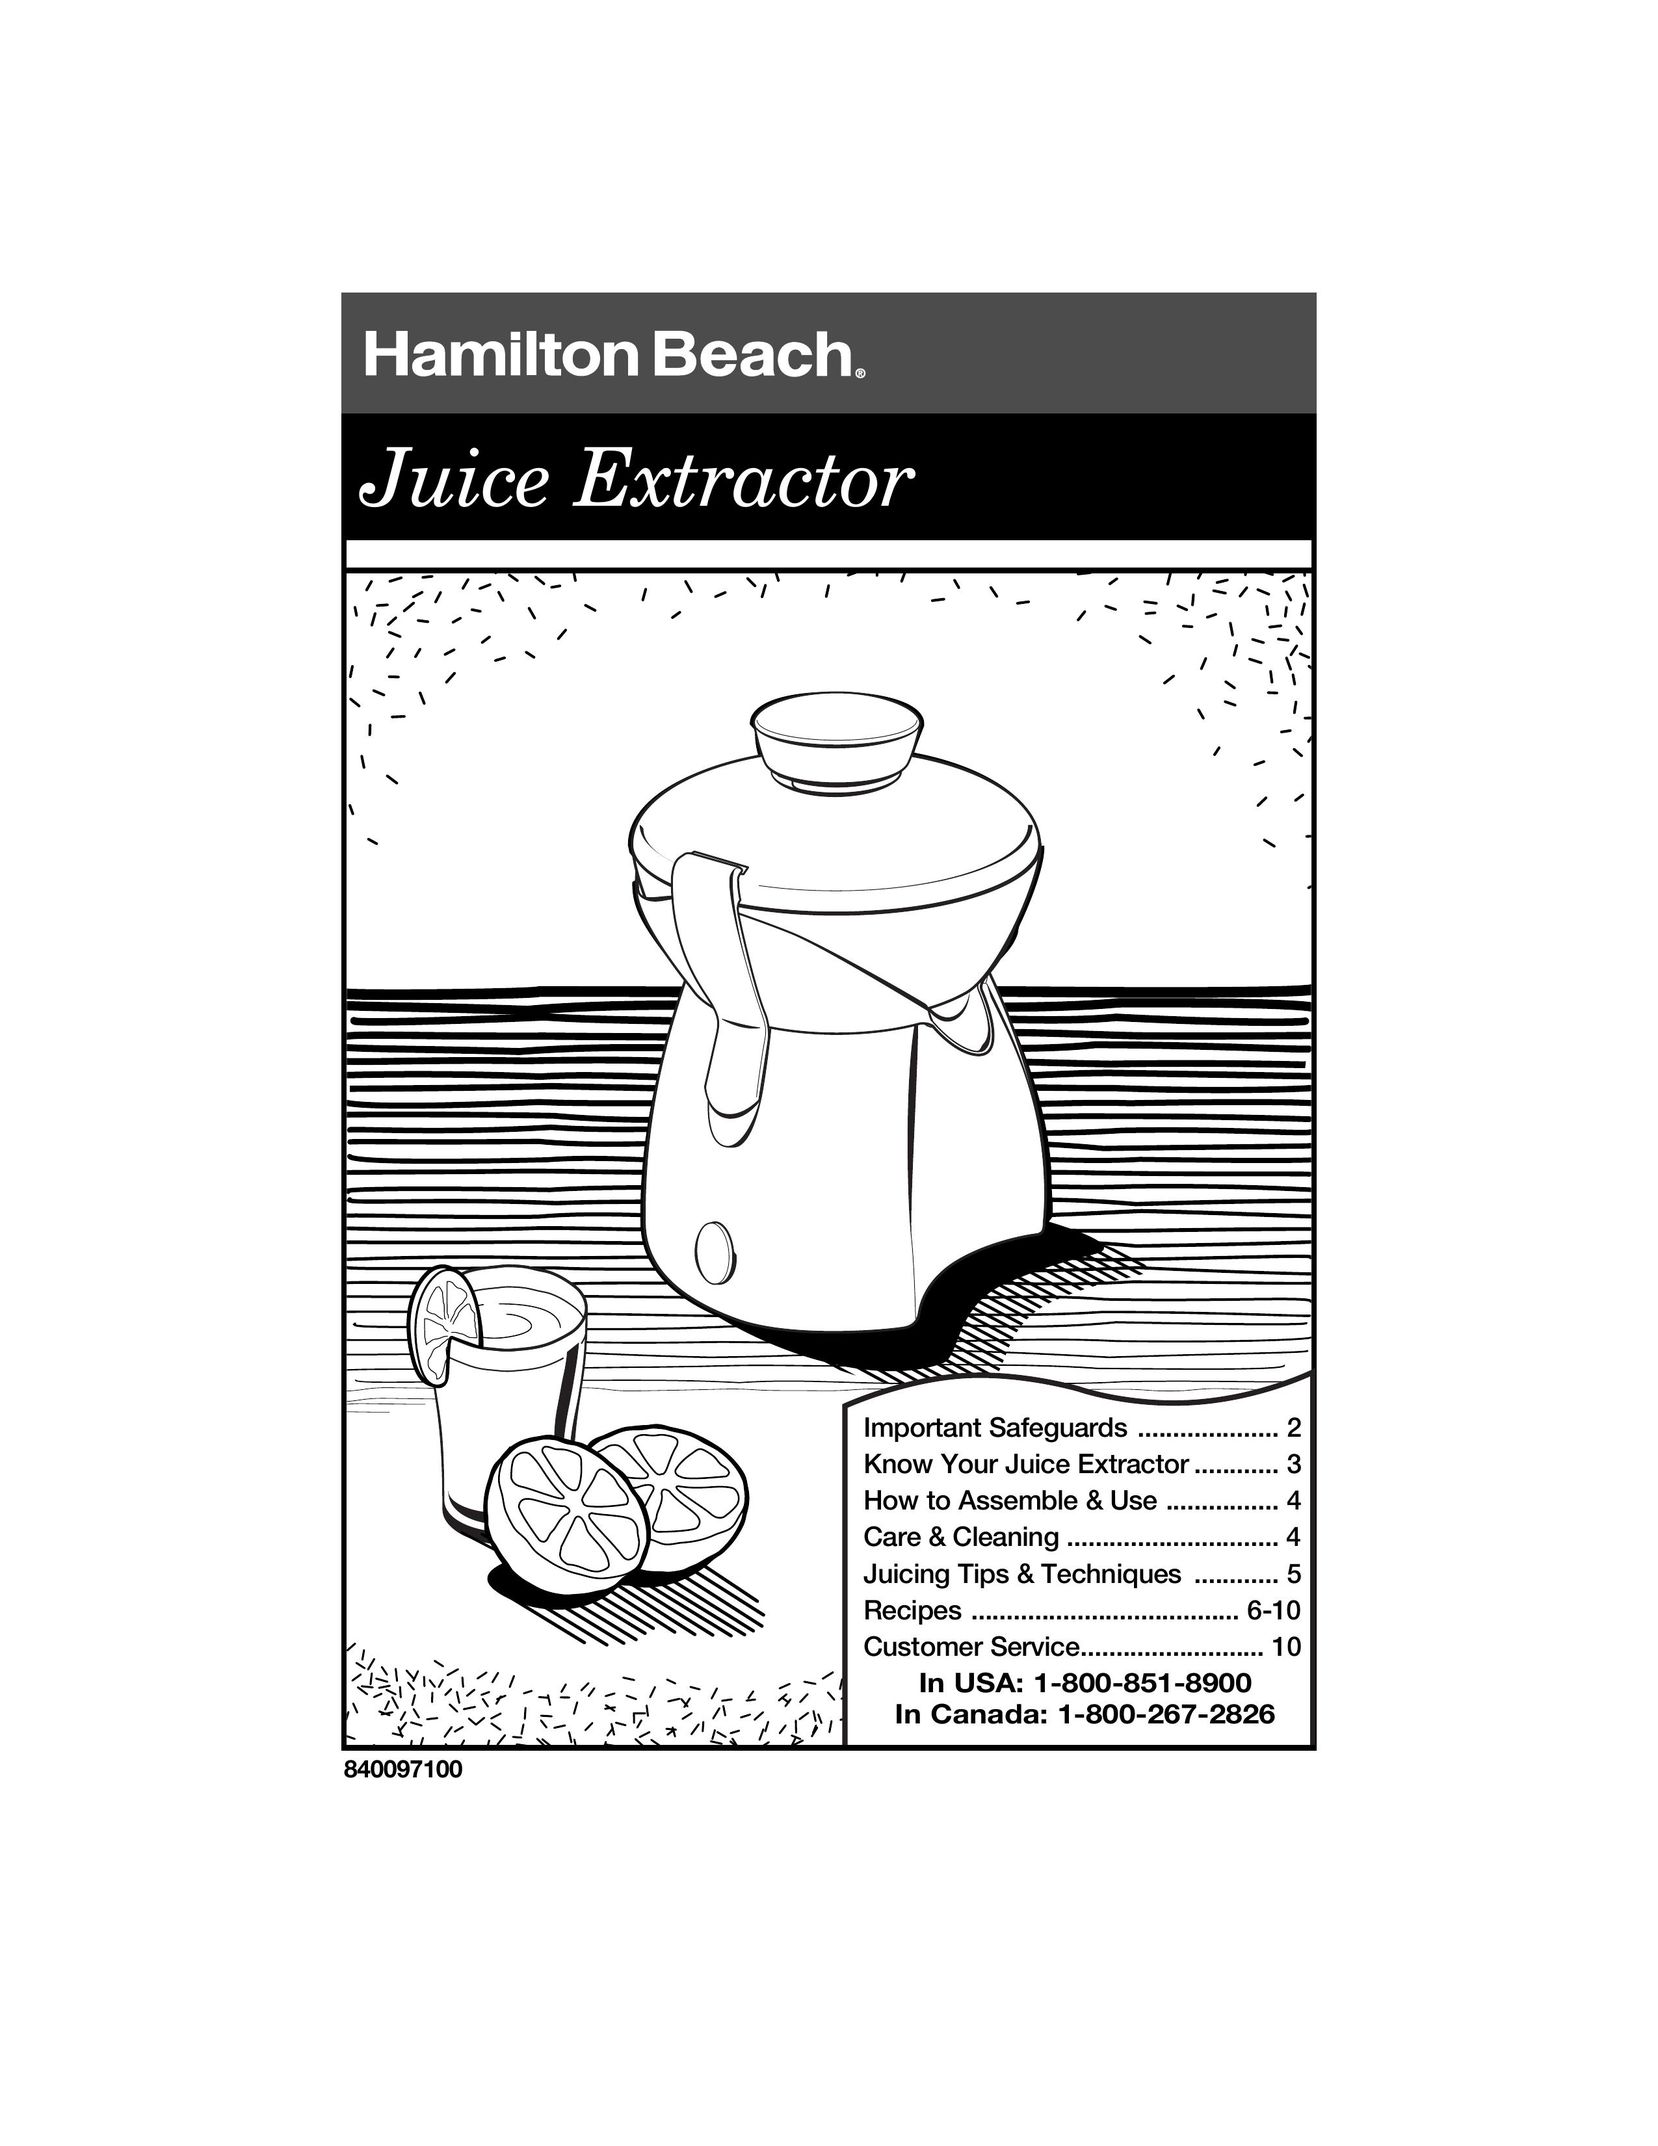 Hamilton Beach 840097100 Juicer User Manual